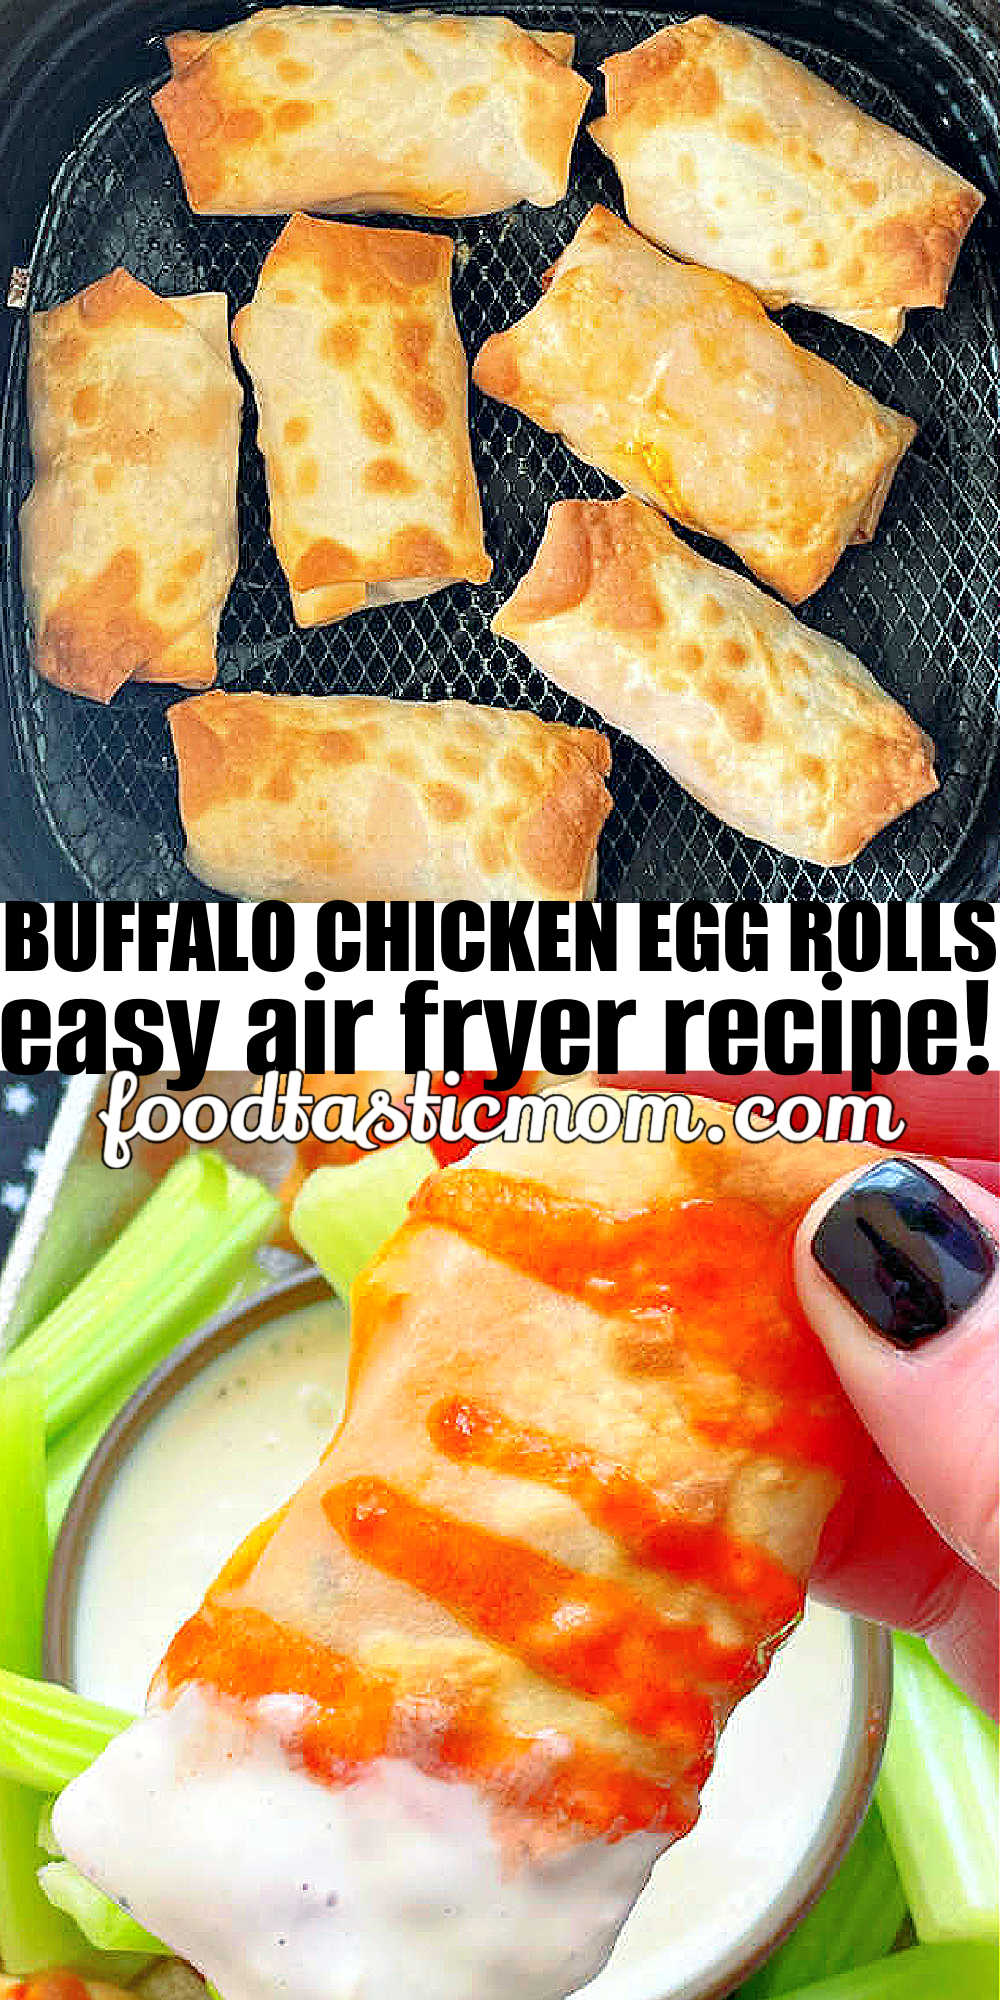 Air Fryer Buffalo Chicken Egg Rolls | Foodtastic Mom #airfryerrecipes #buffalochicken #chickenrecipes #airfryerbuffalochickeneggrolls via @foodtasticmom